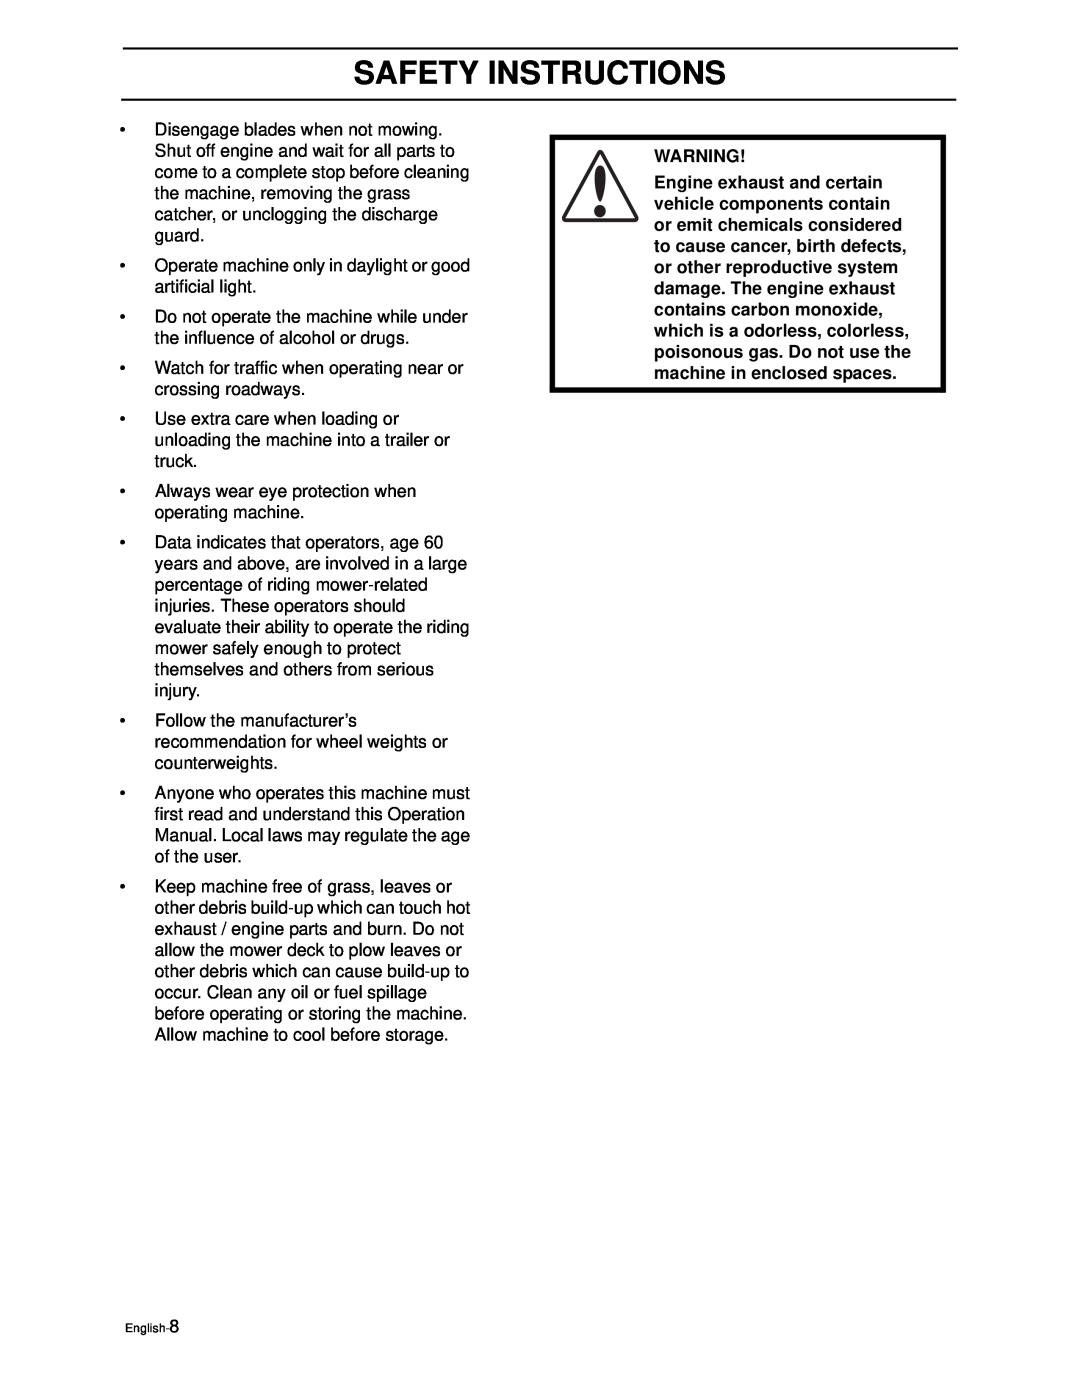 Poulan PZ4822 manual Safety Instructions, English-8 